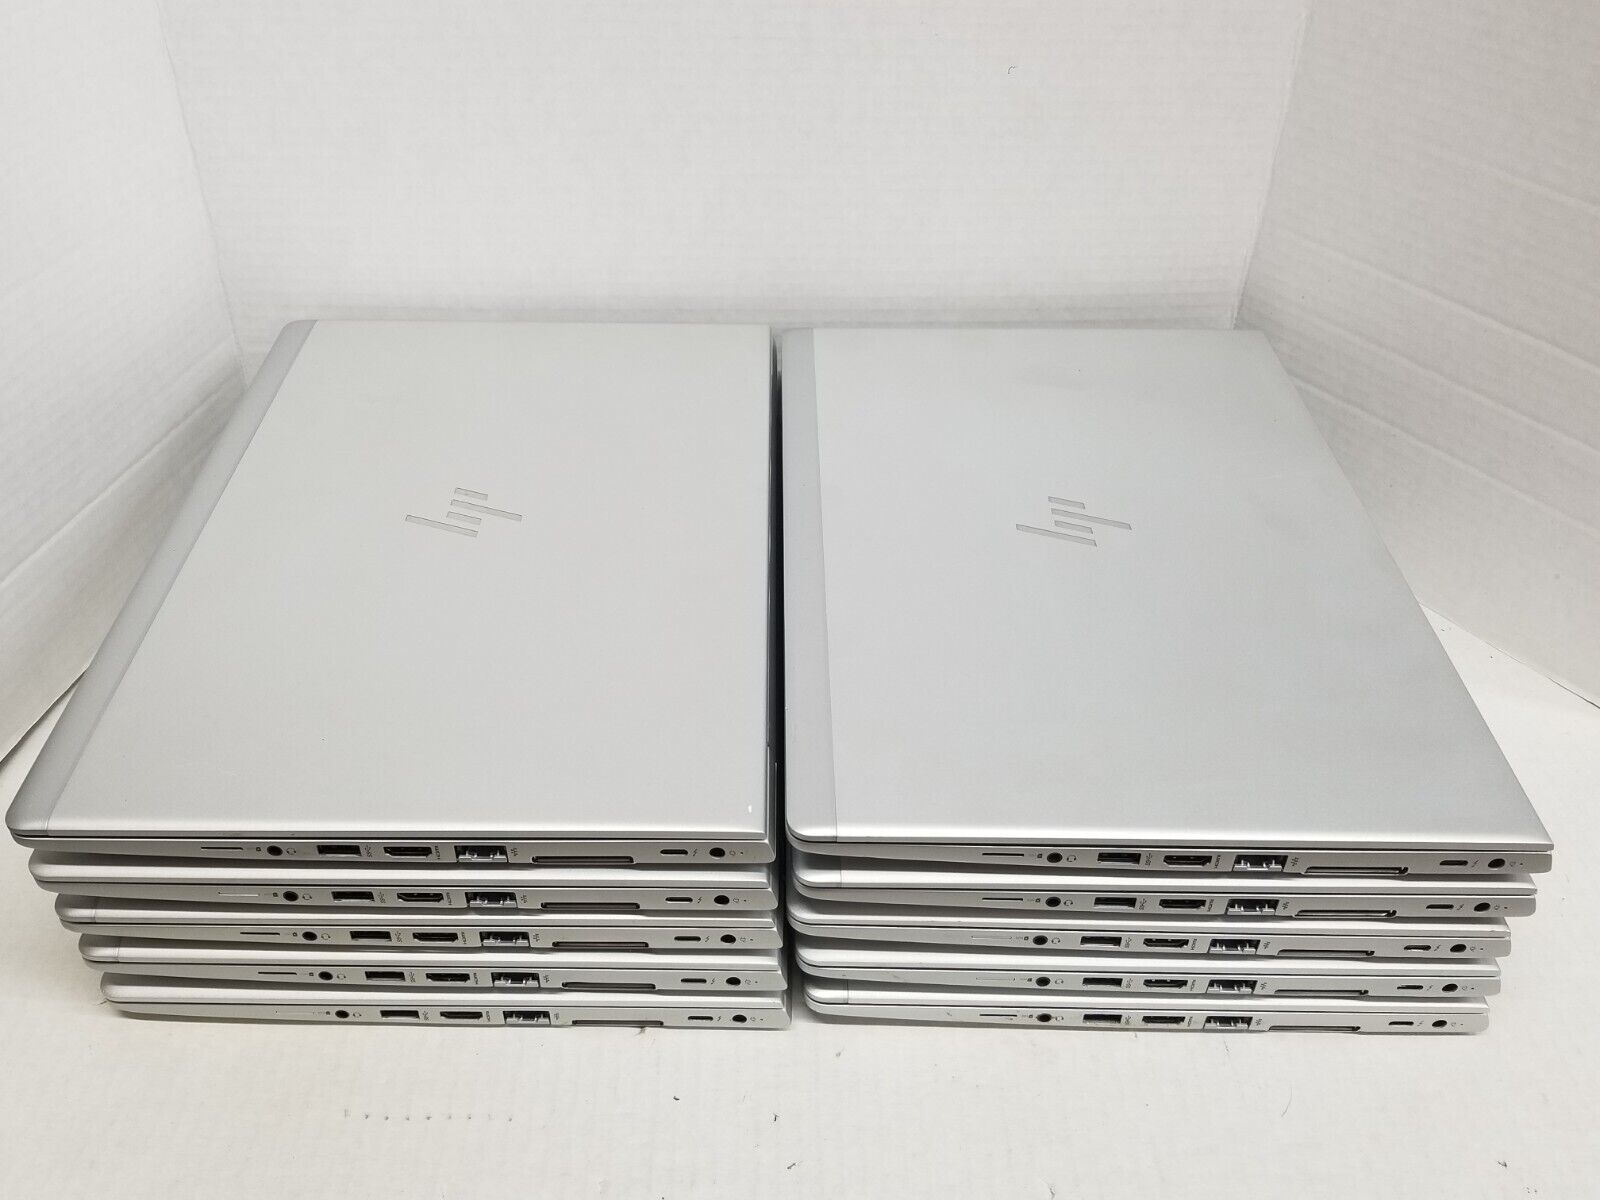 Lot of 10 HP EliteBook 840 G6 Laptops 14'' i5 8GB 256GB SSD Webcam Backlit FHD